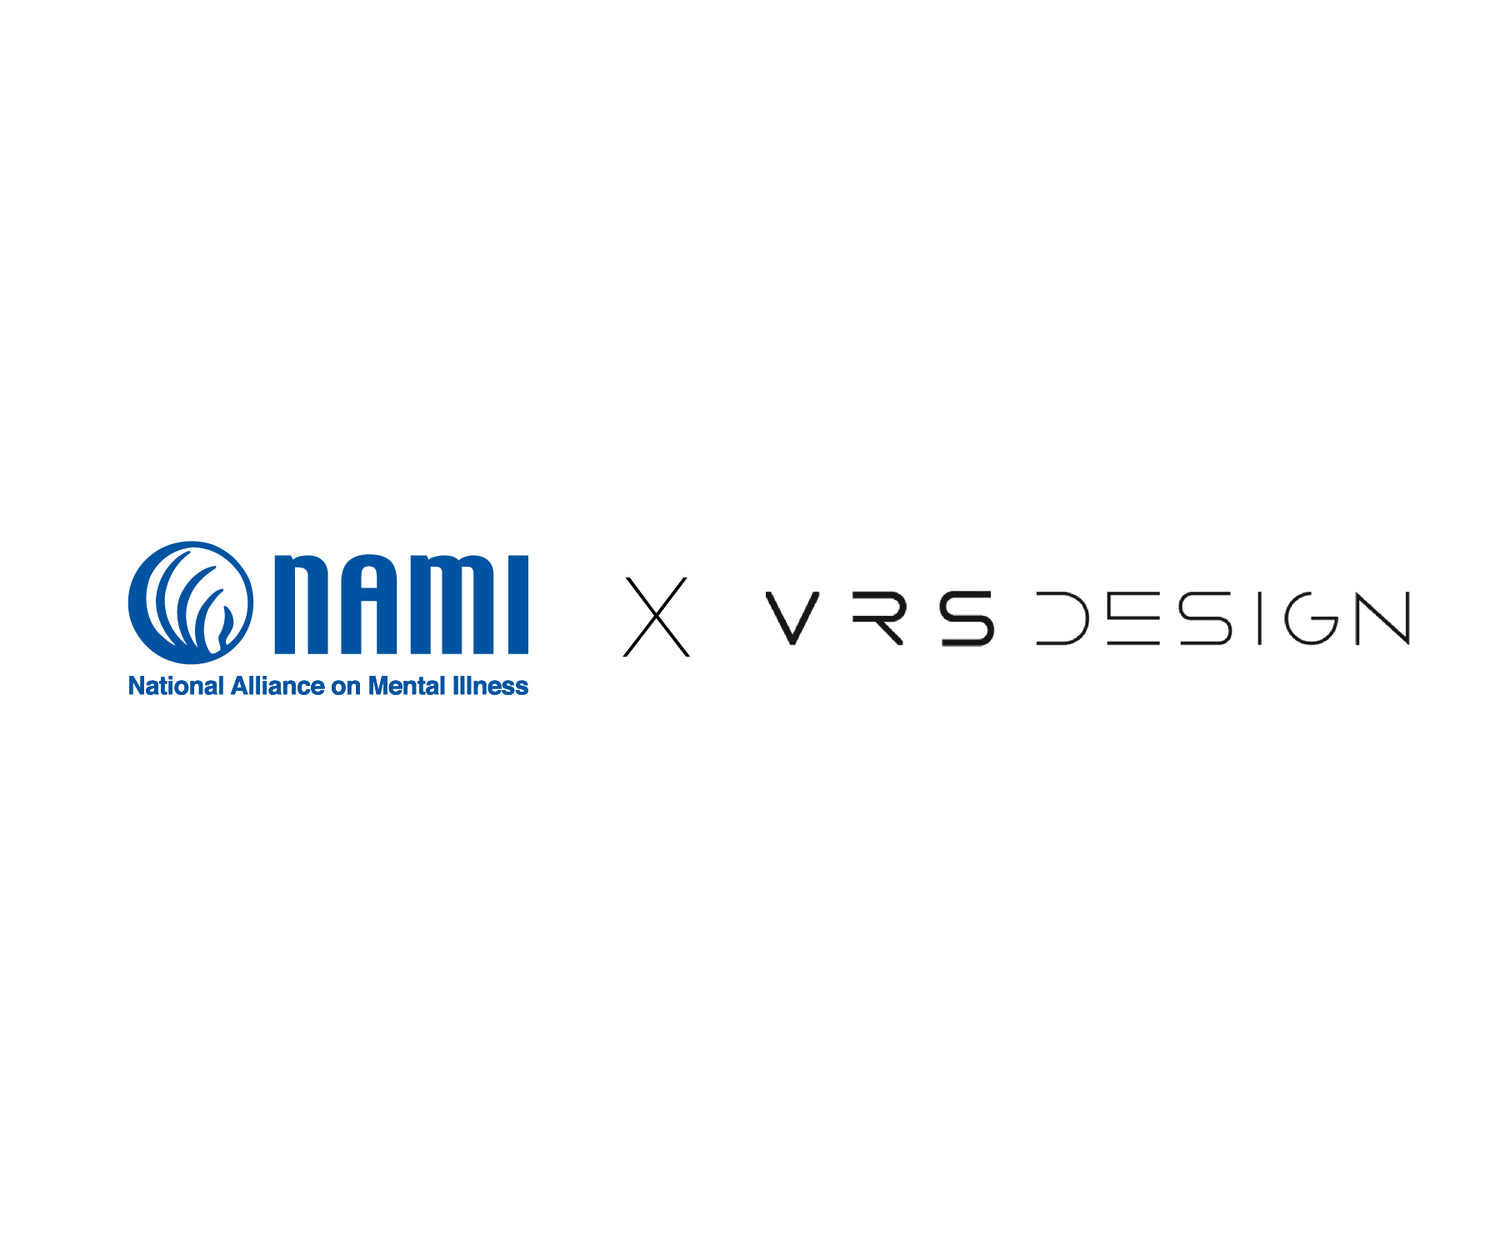 BREAKING NEWS! VRS Donates to NAMI